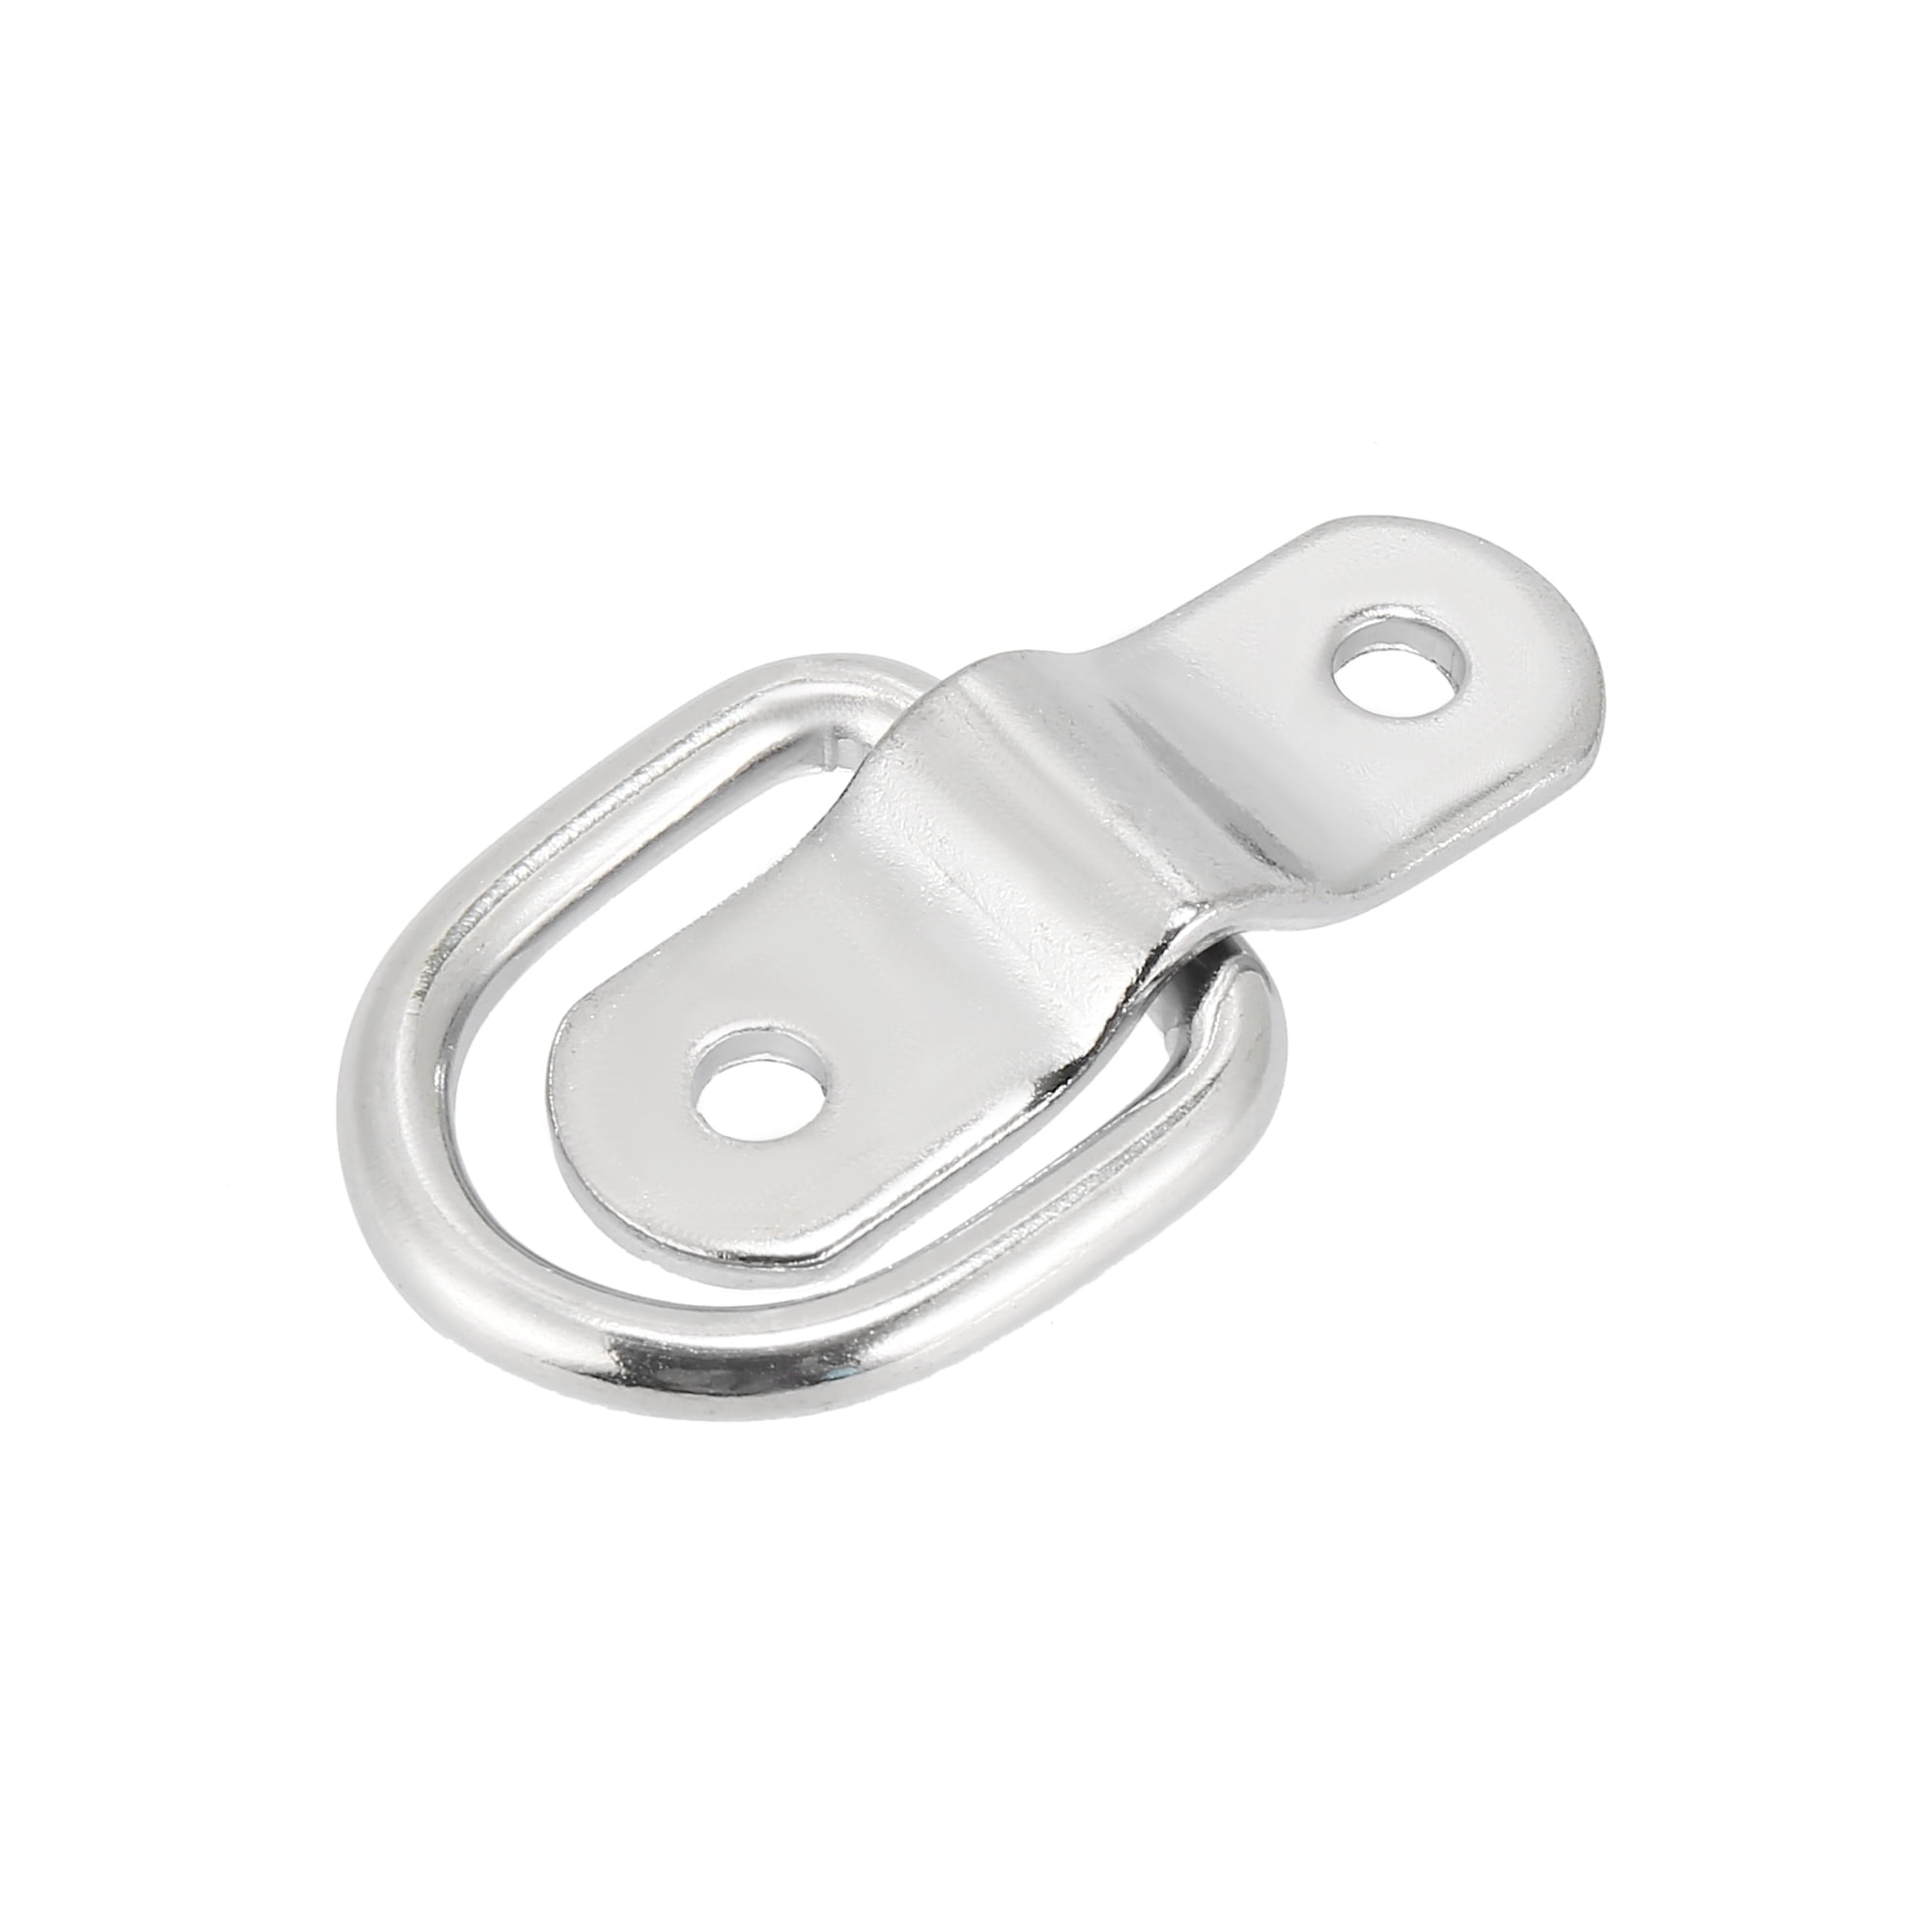 12pcs D Shape Ring Tie Down Anchors 1/4 Diameter Lashing Ring for